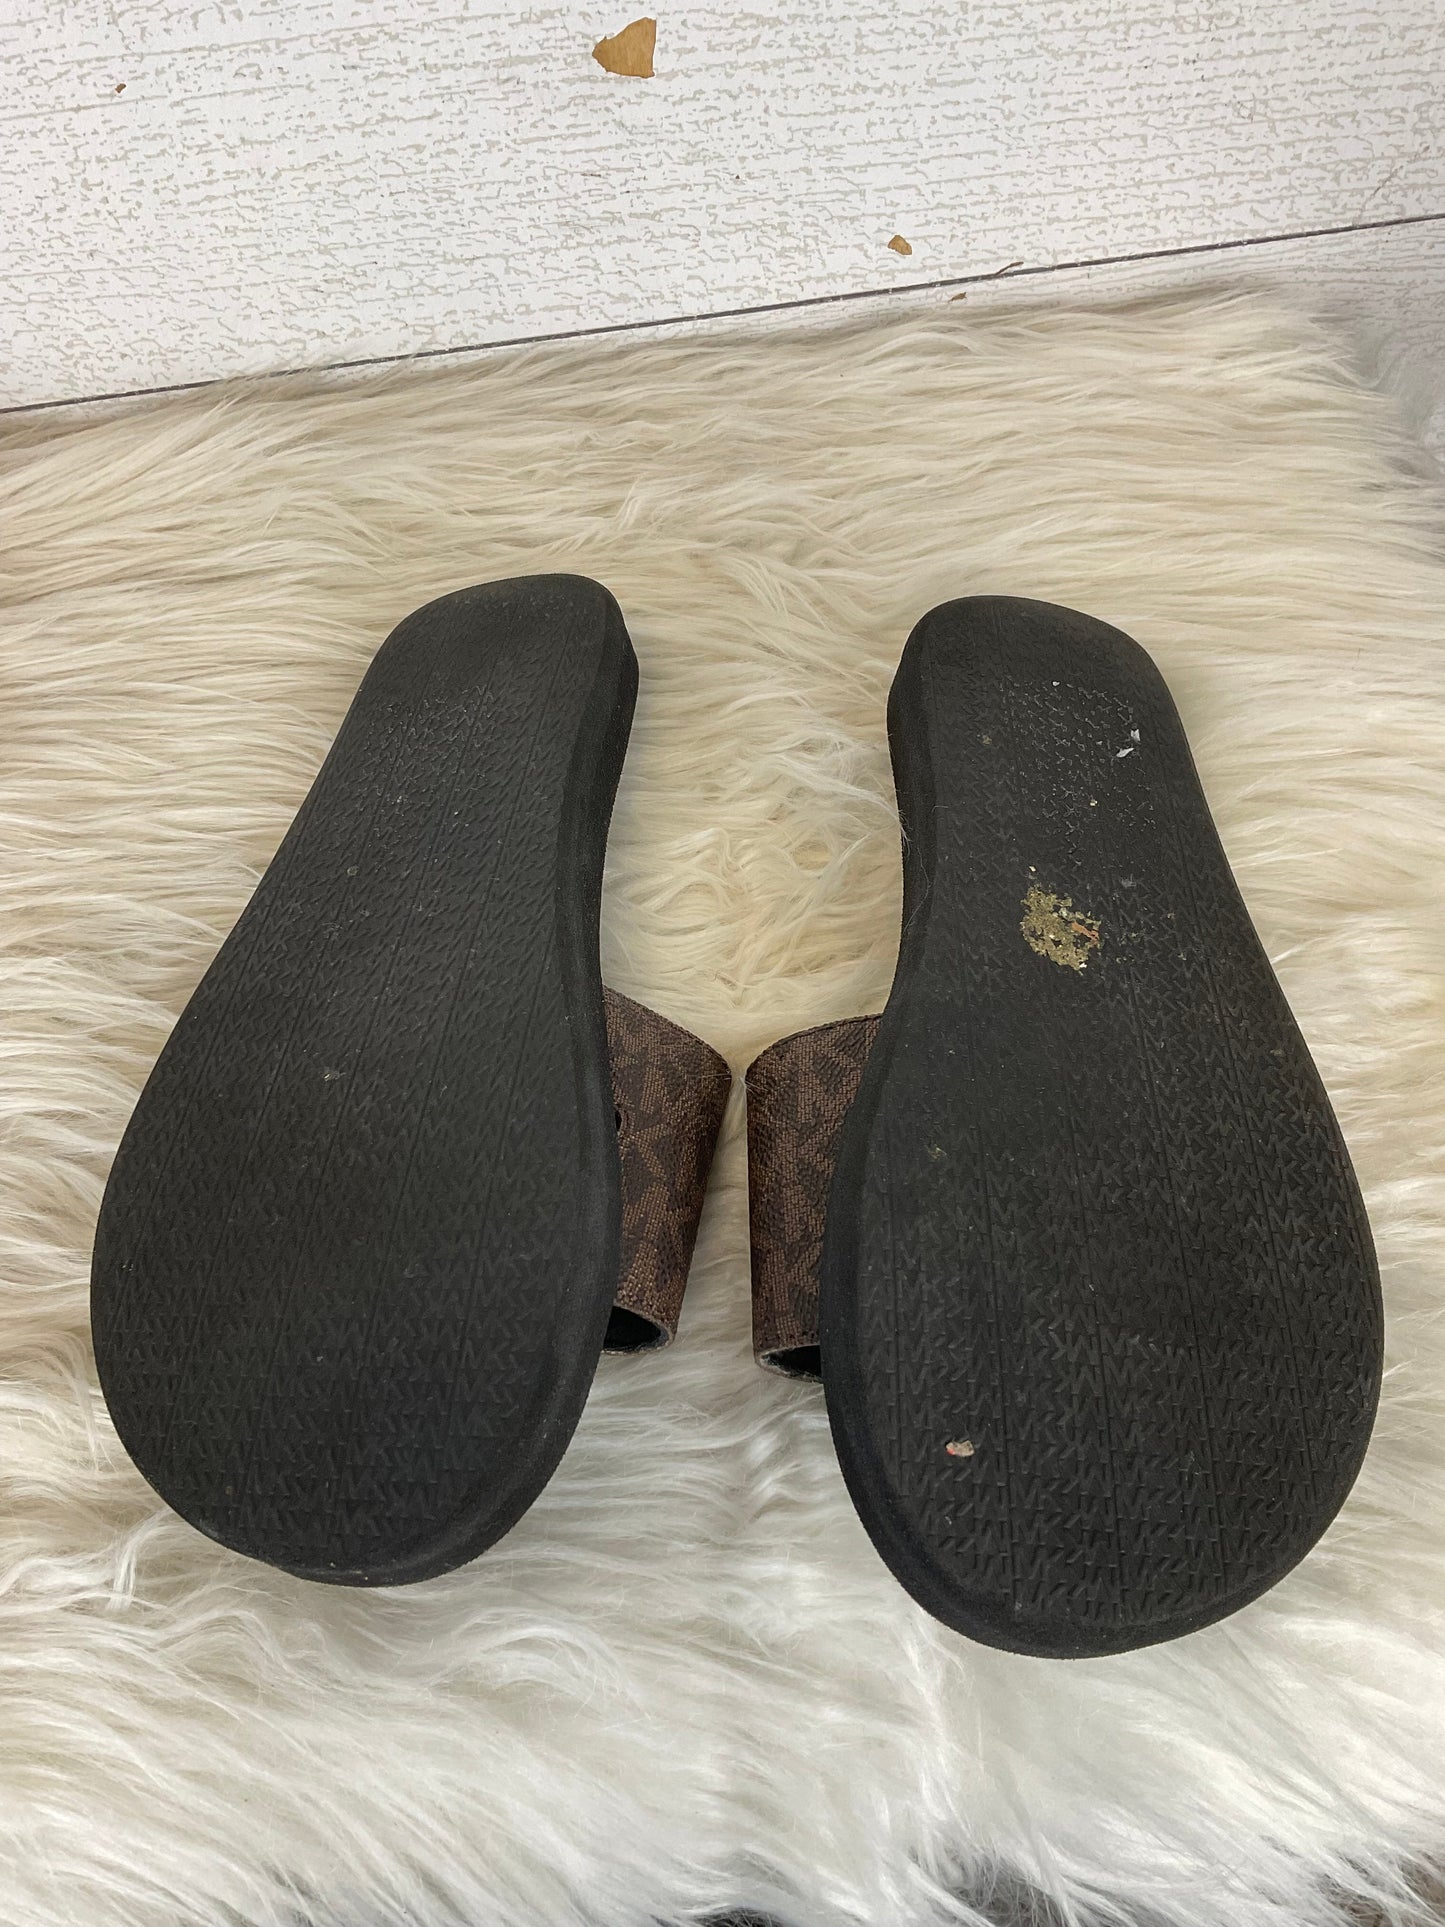 Sandals Designer By Michael Kors  Size: 5